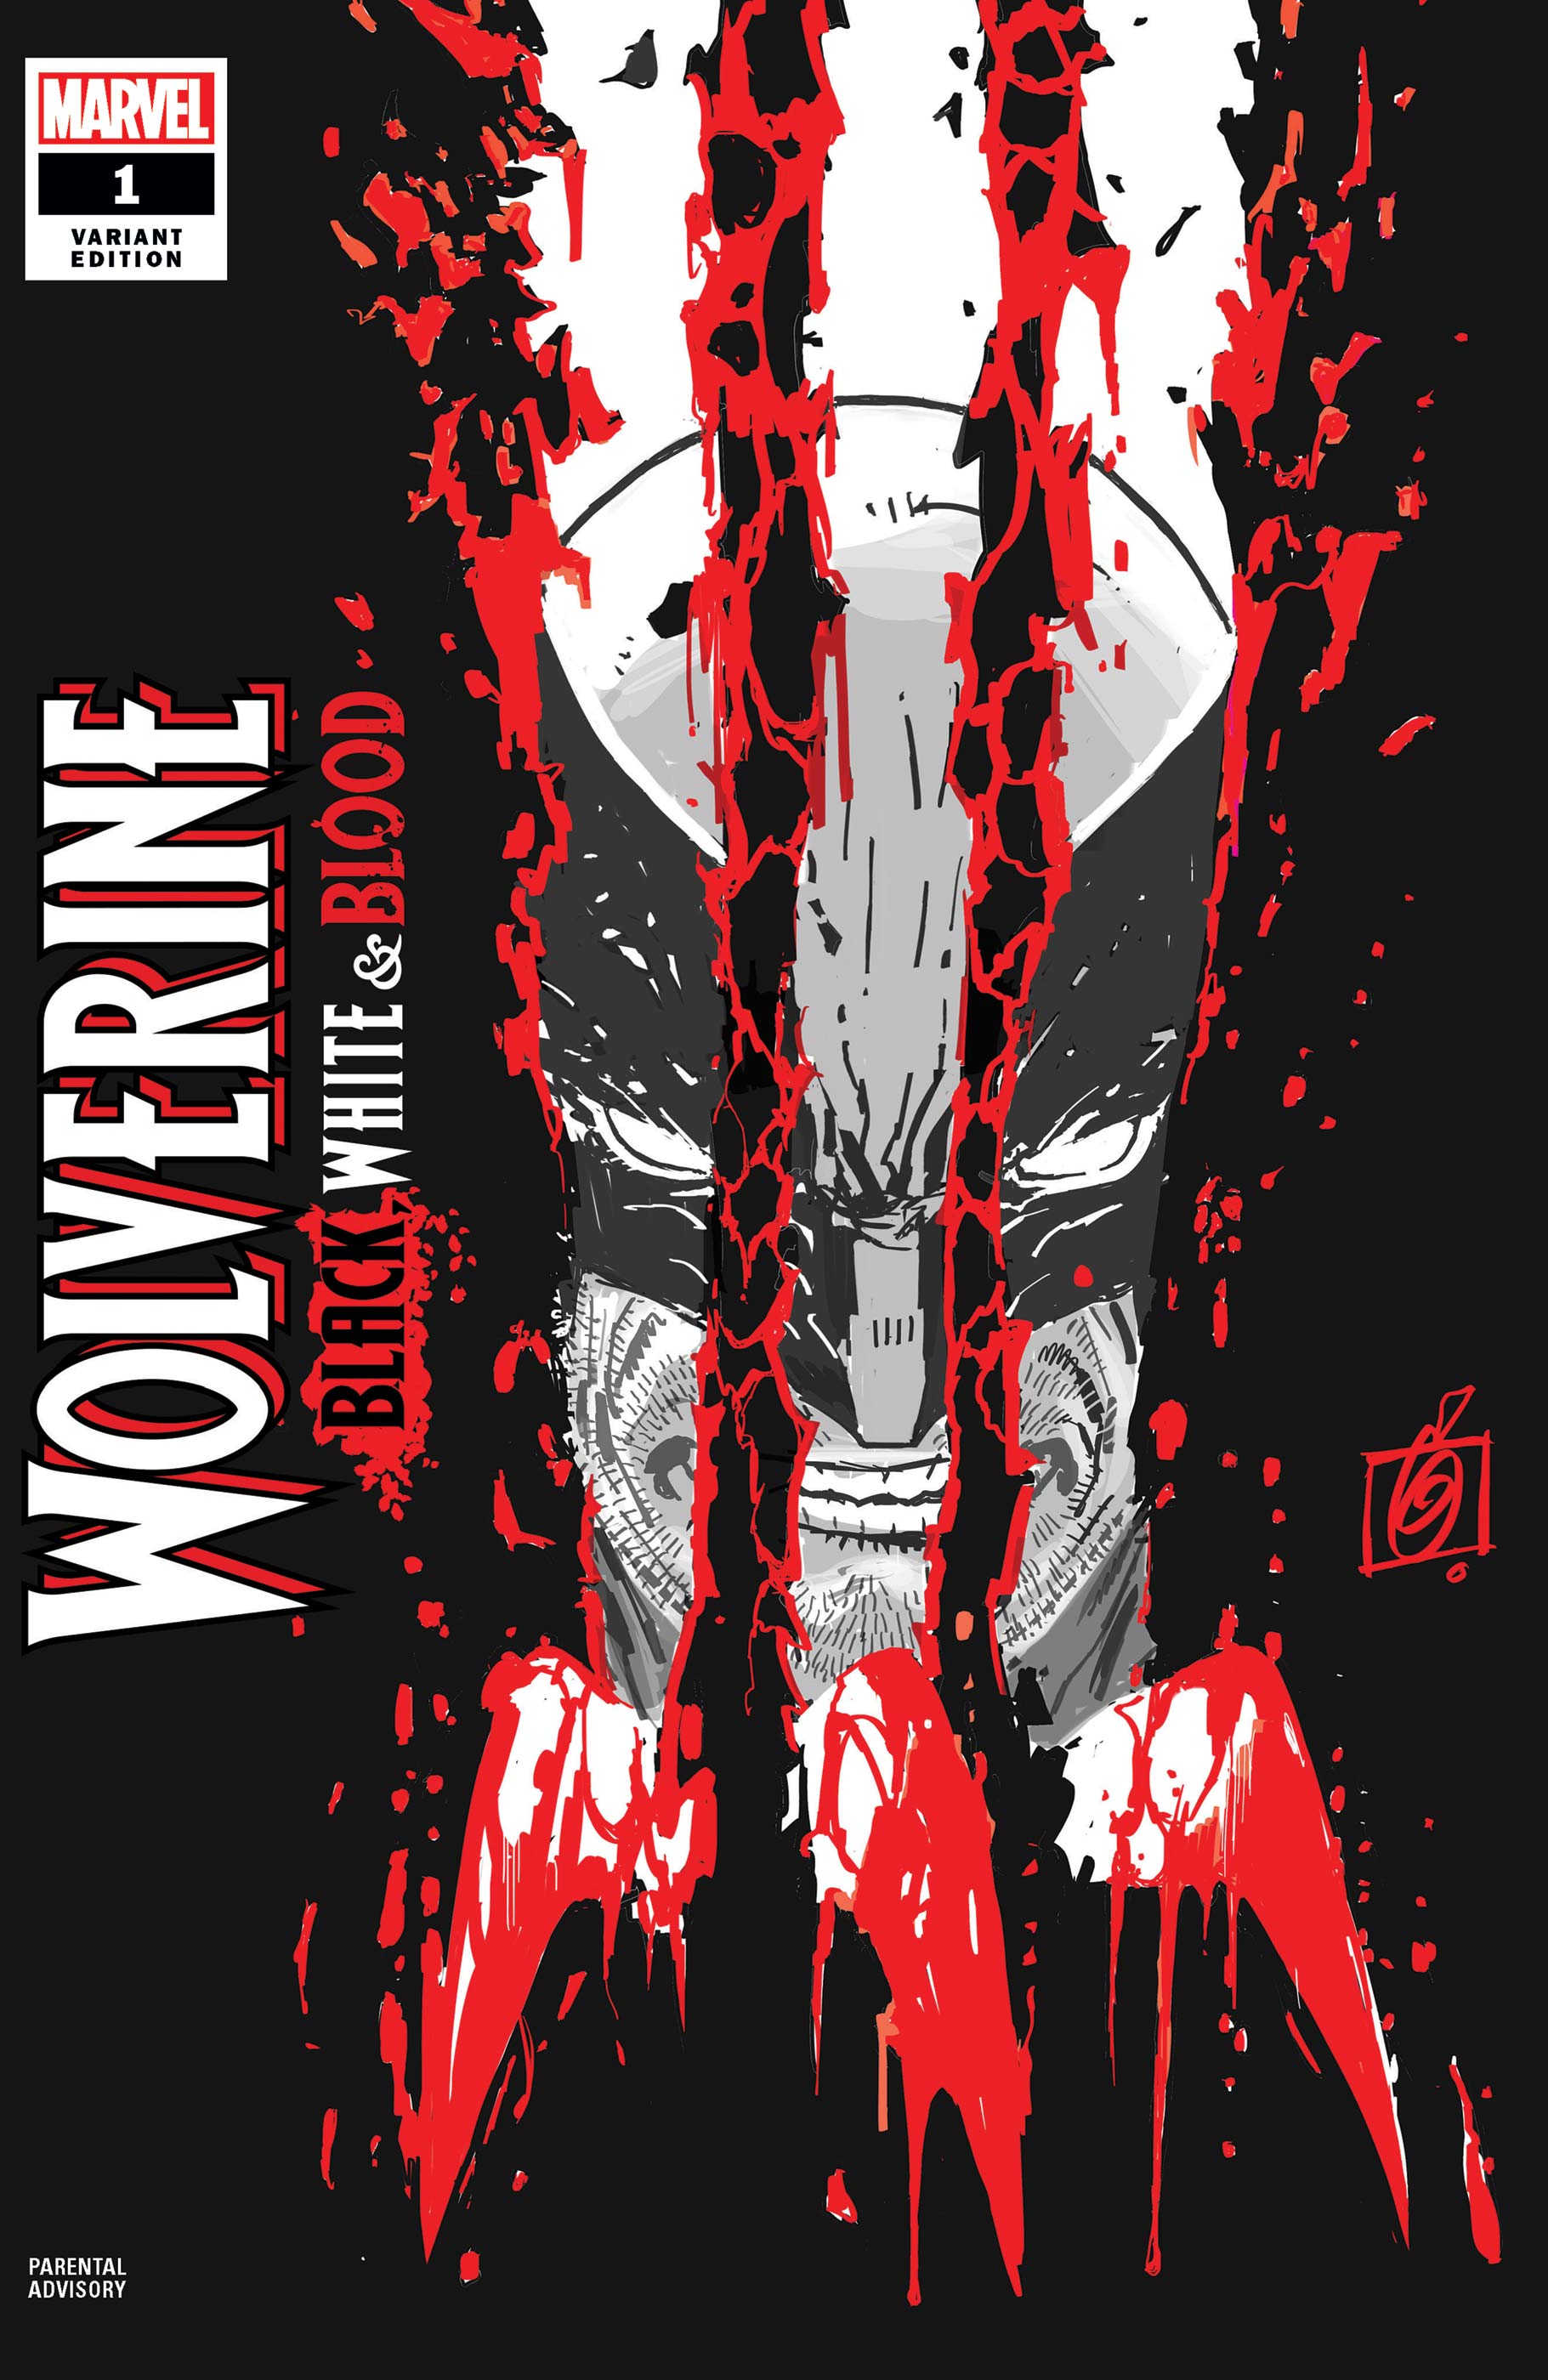 Wolverine: Black, White & Blood (2020) #1 (Variant)